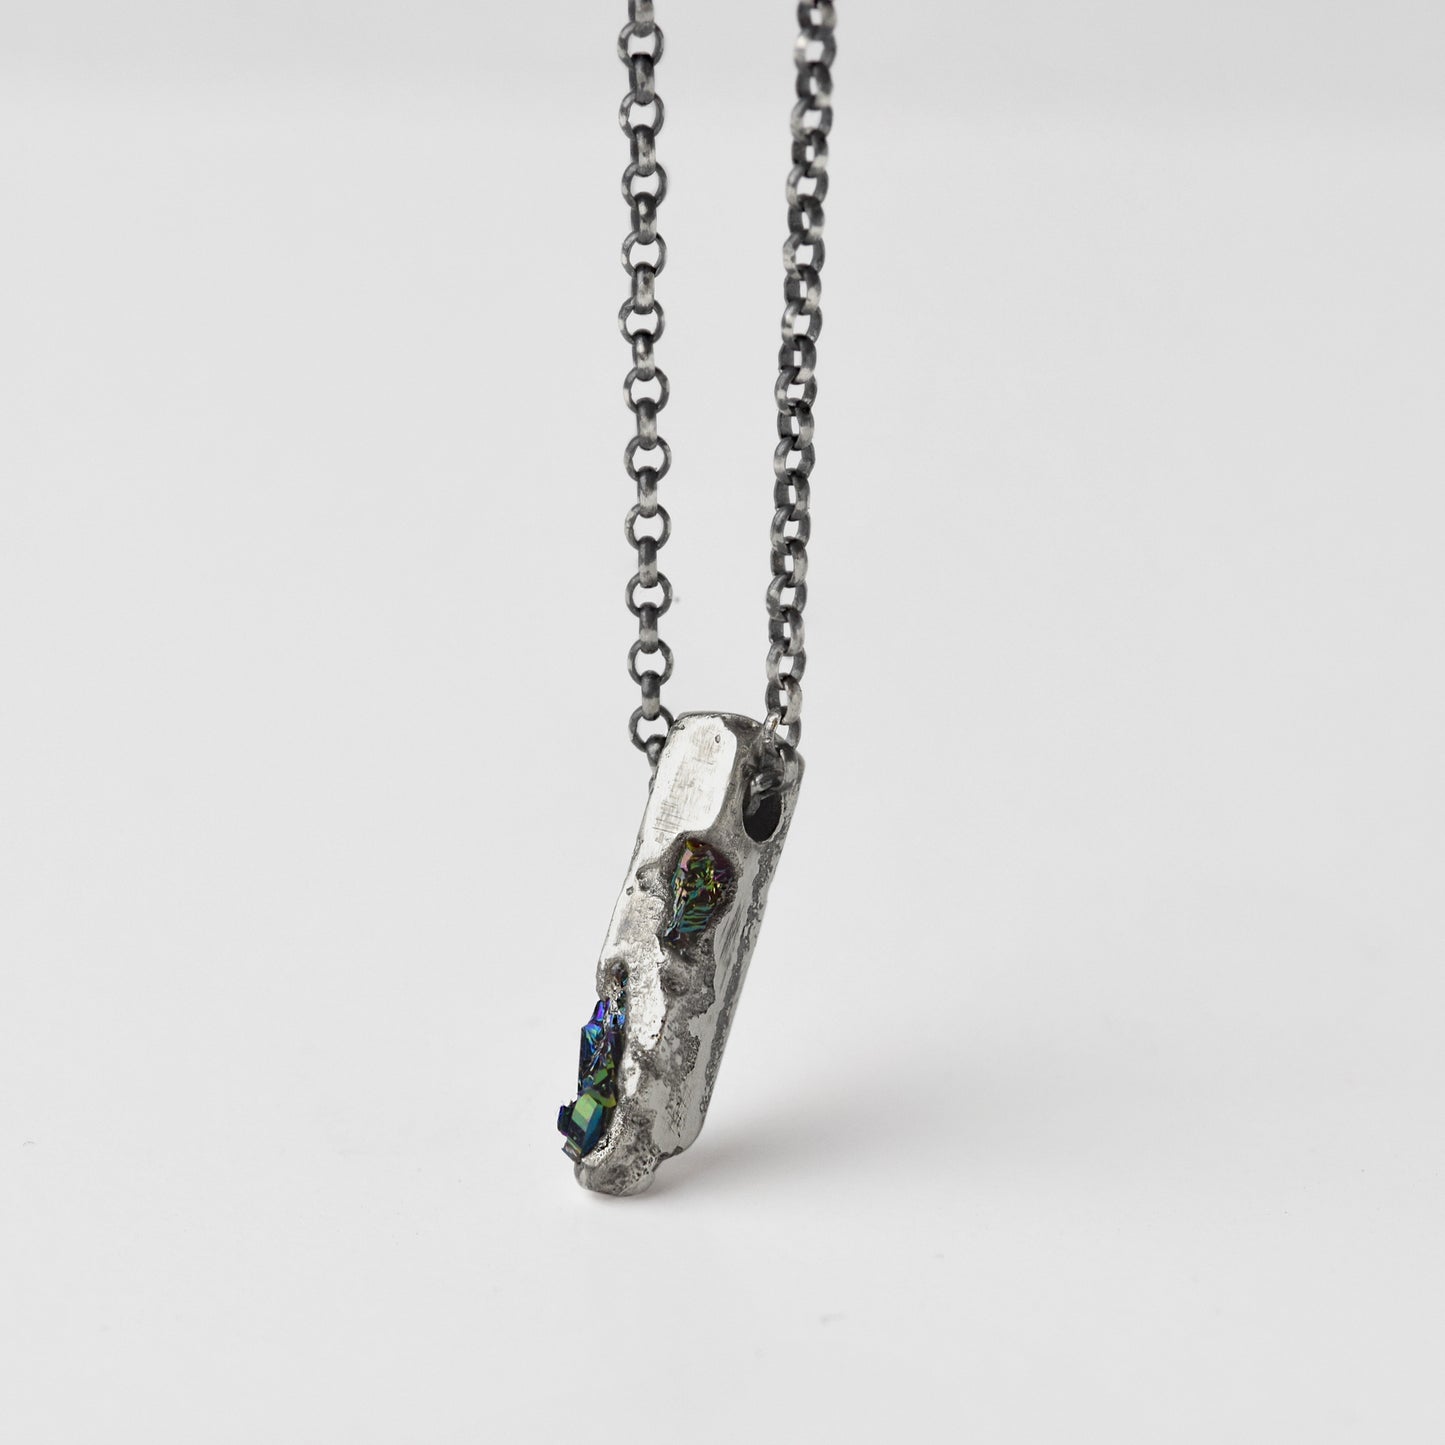 Rubkat - Sterling Silver Necklace With Black Gemstones